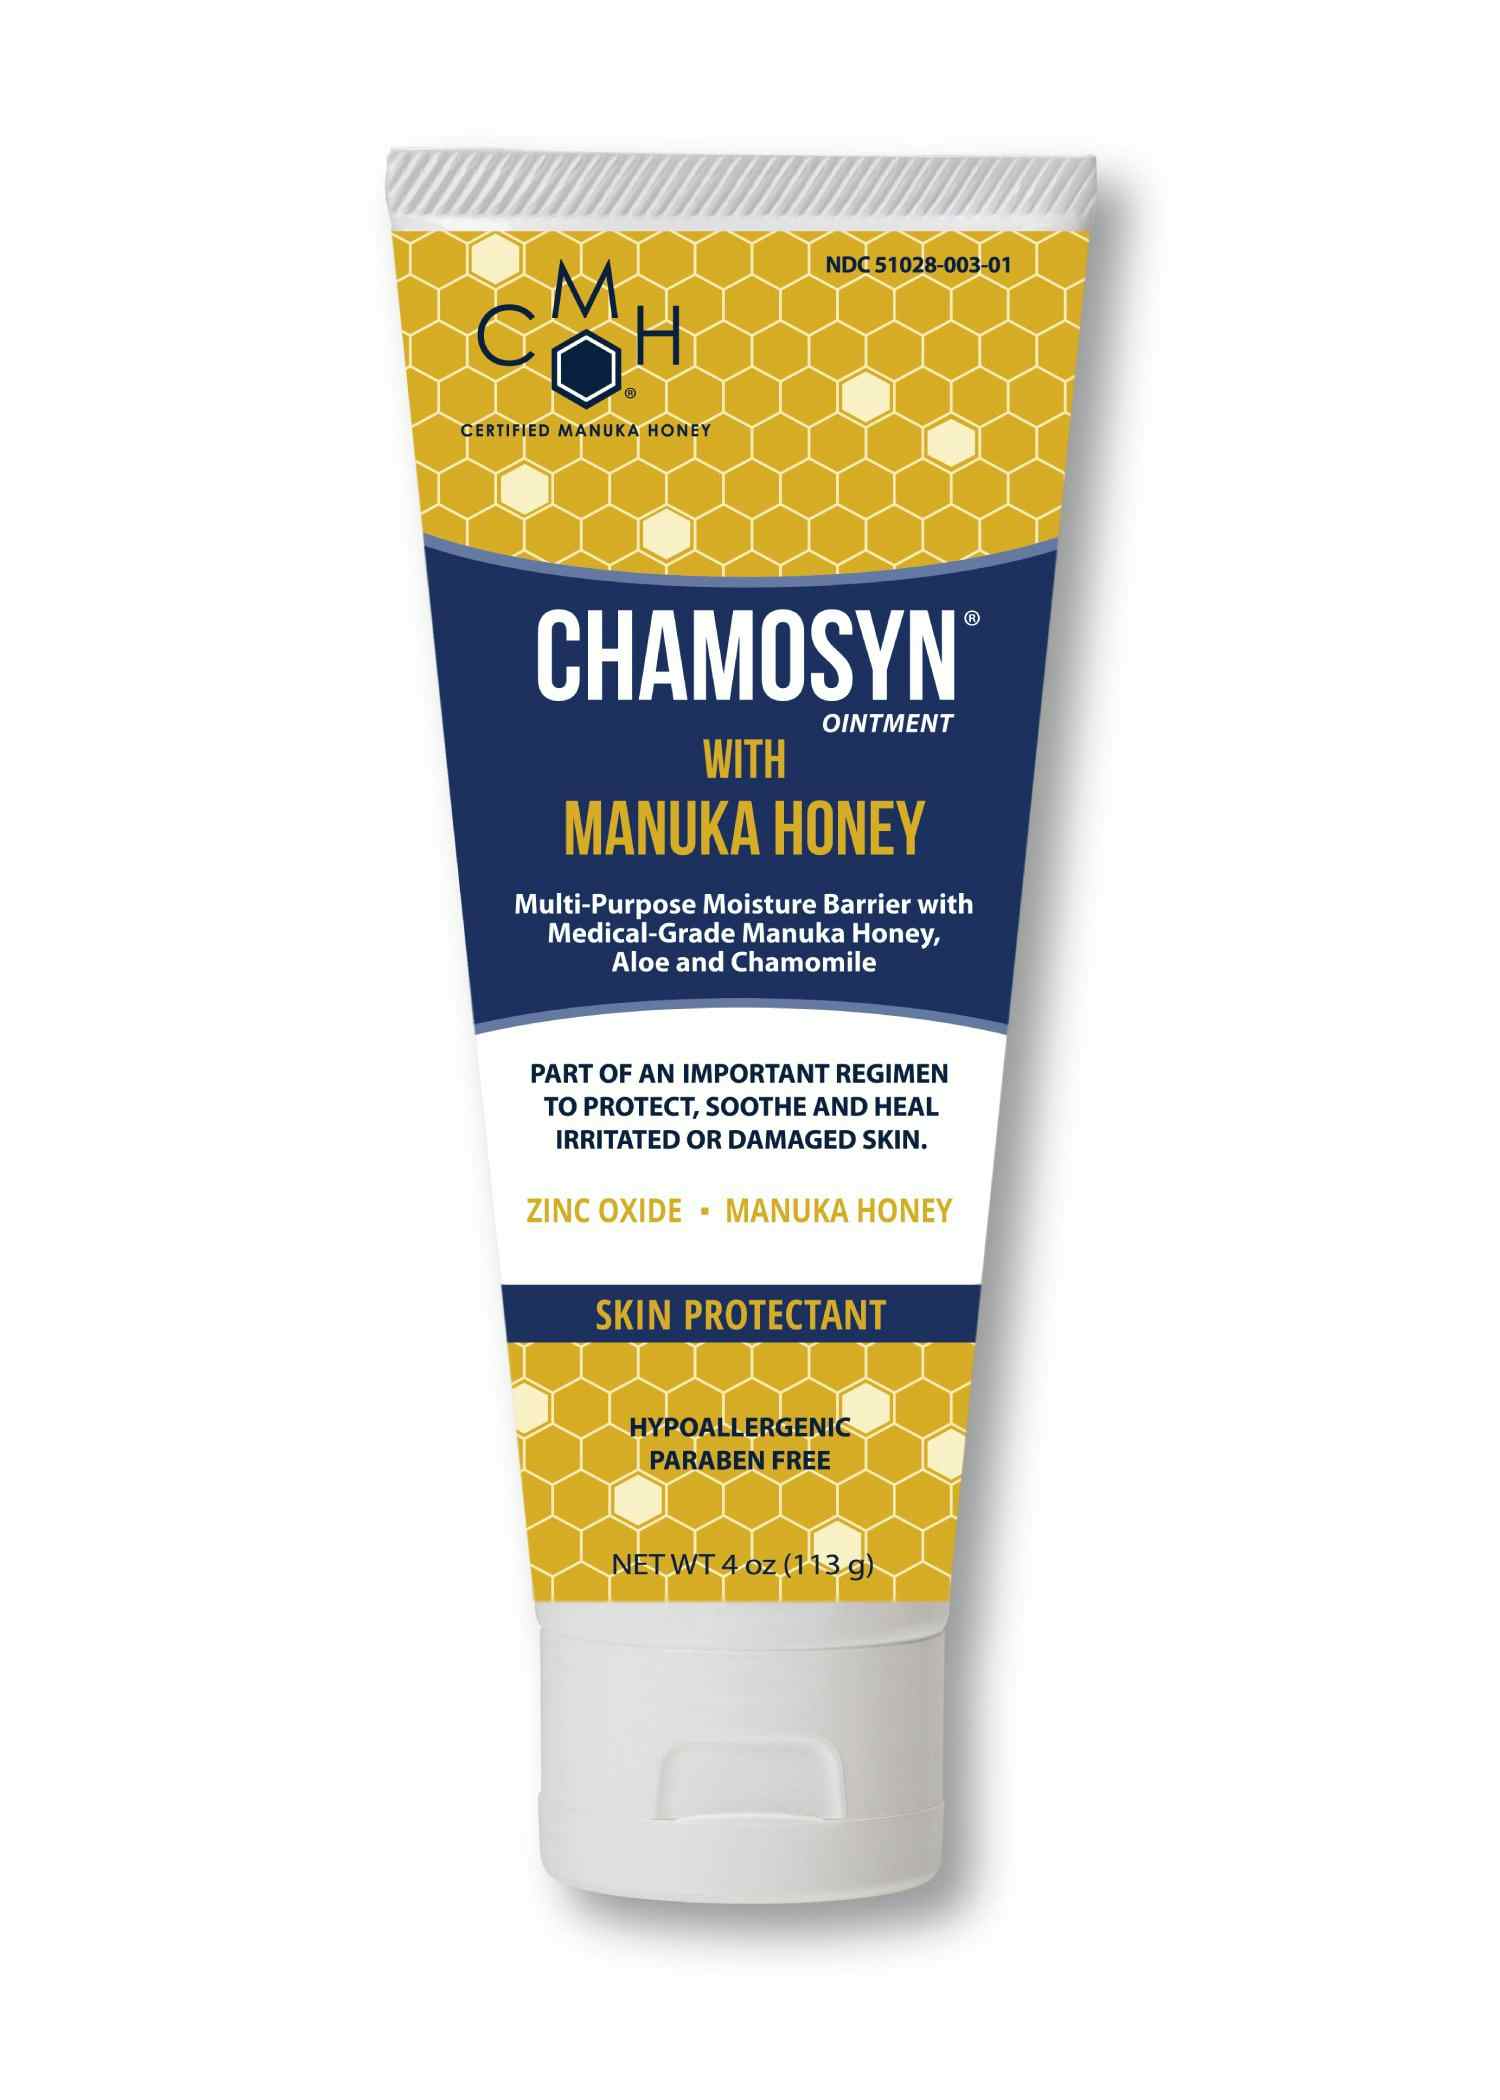 Chamosyn with Manuka Honey Multi-Purpose Moisture Barrier Skin Protectant, 4 oz., SC0125W, 1 Each